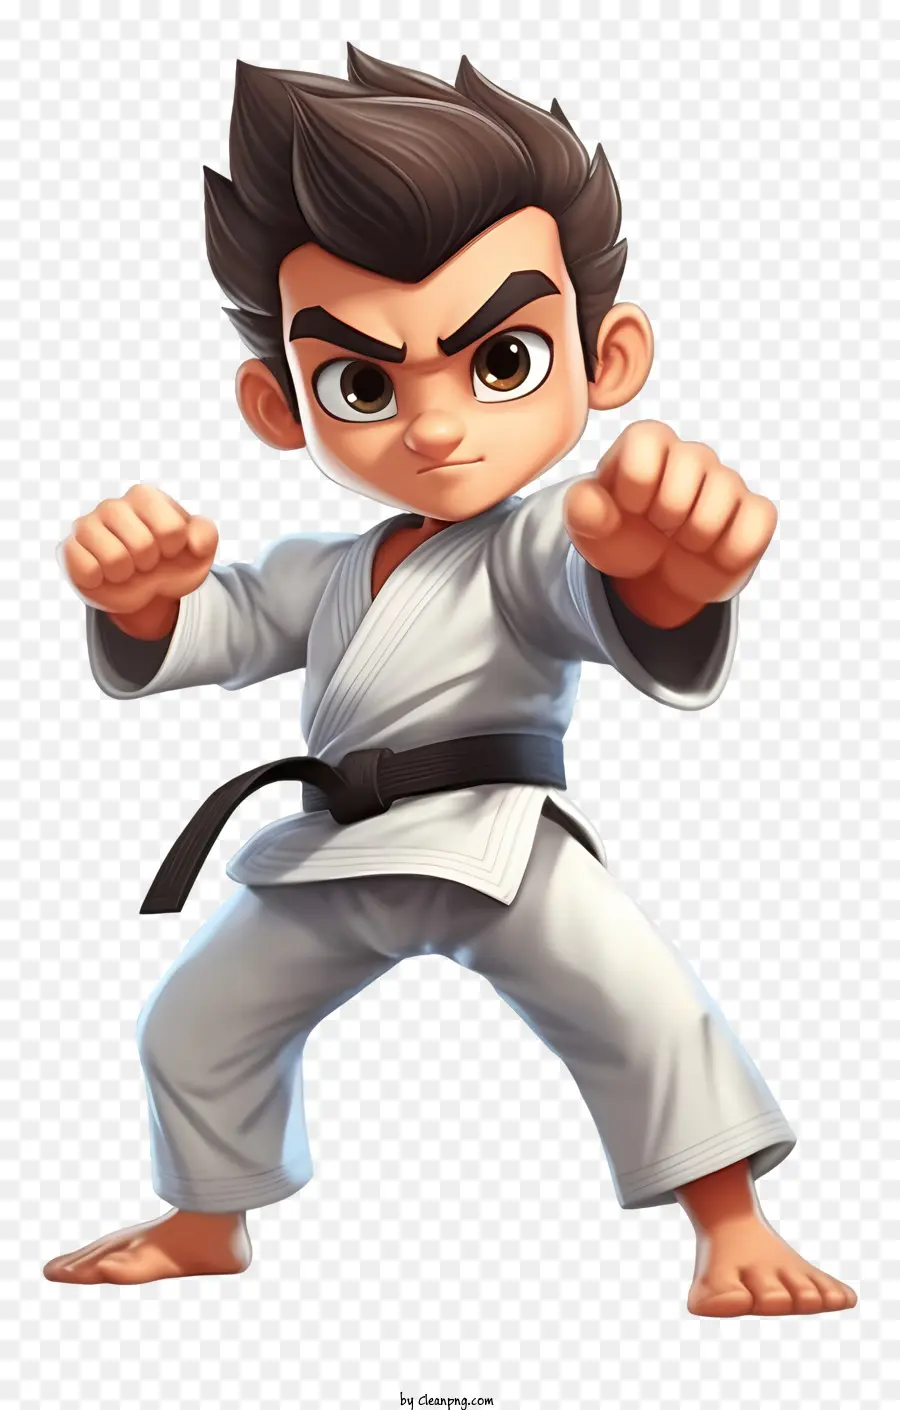 karate fighter karate martial arts white karate outfit black belt